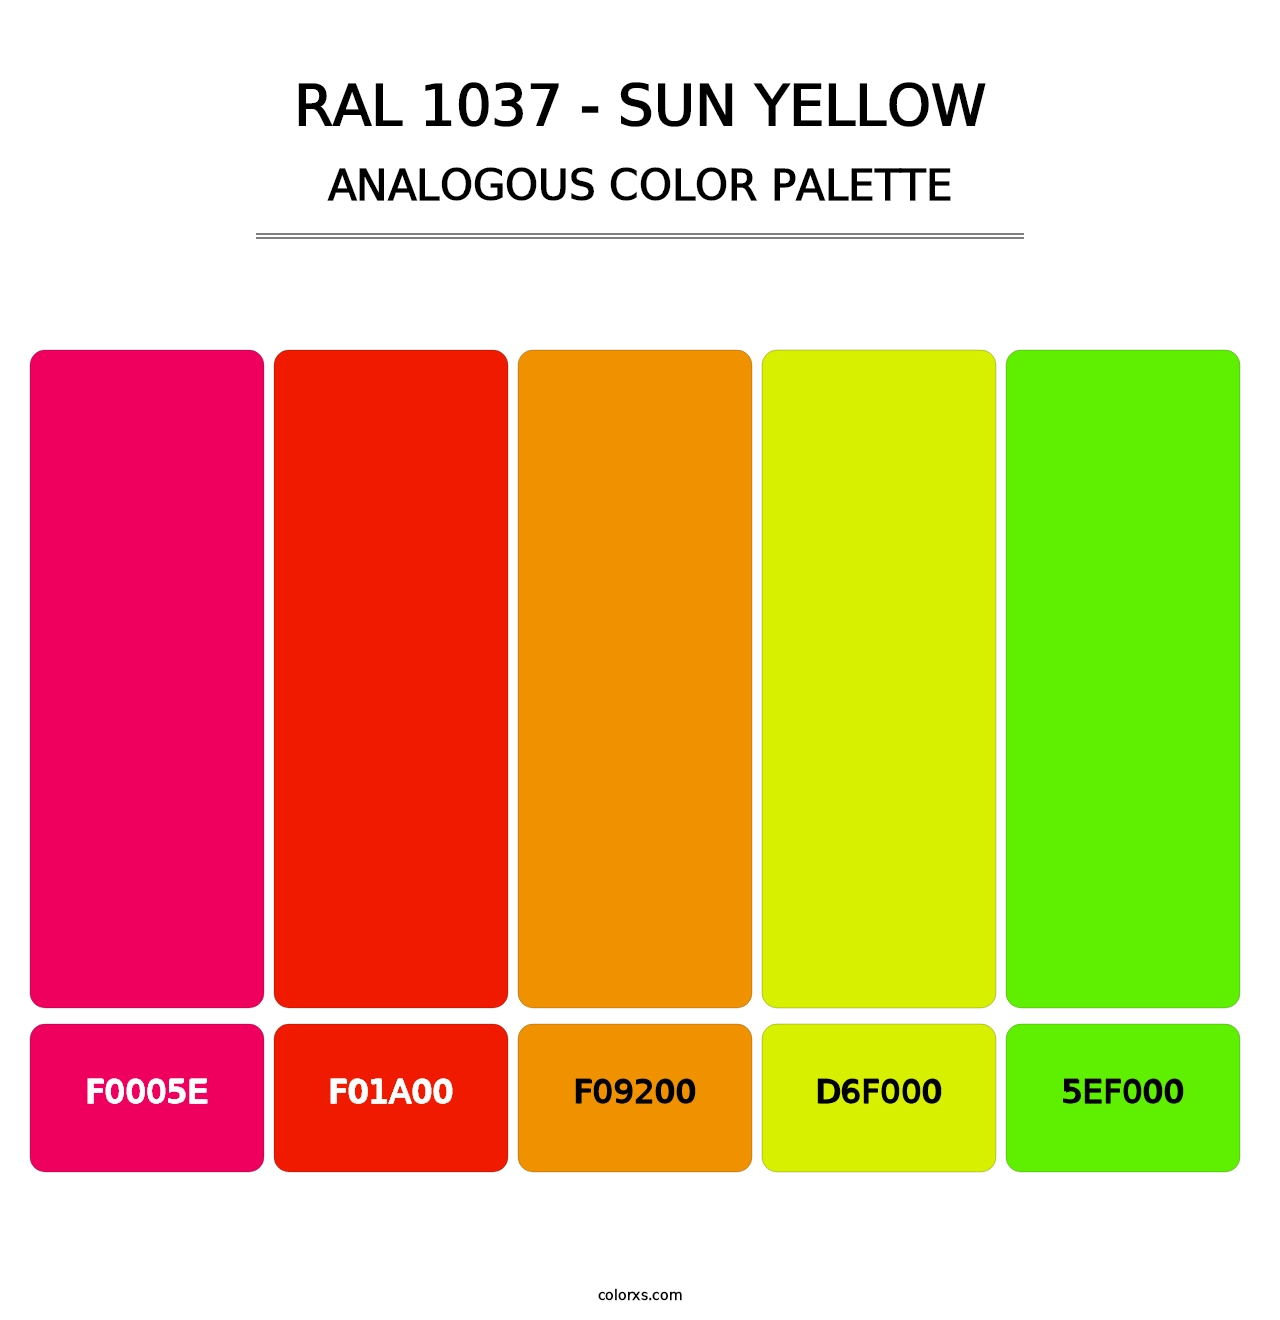 RAL 1037 - Sun Yellow - Analogous Color Palette